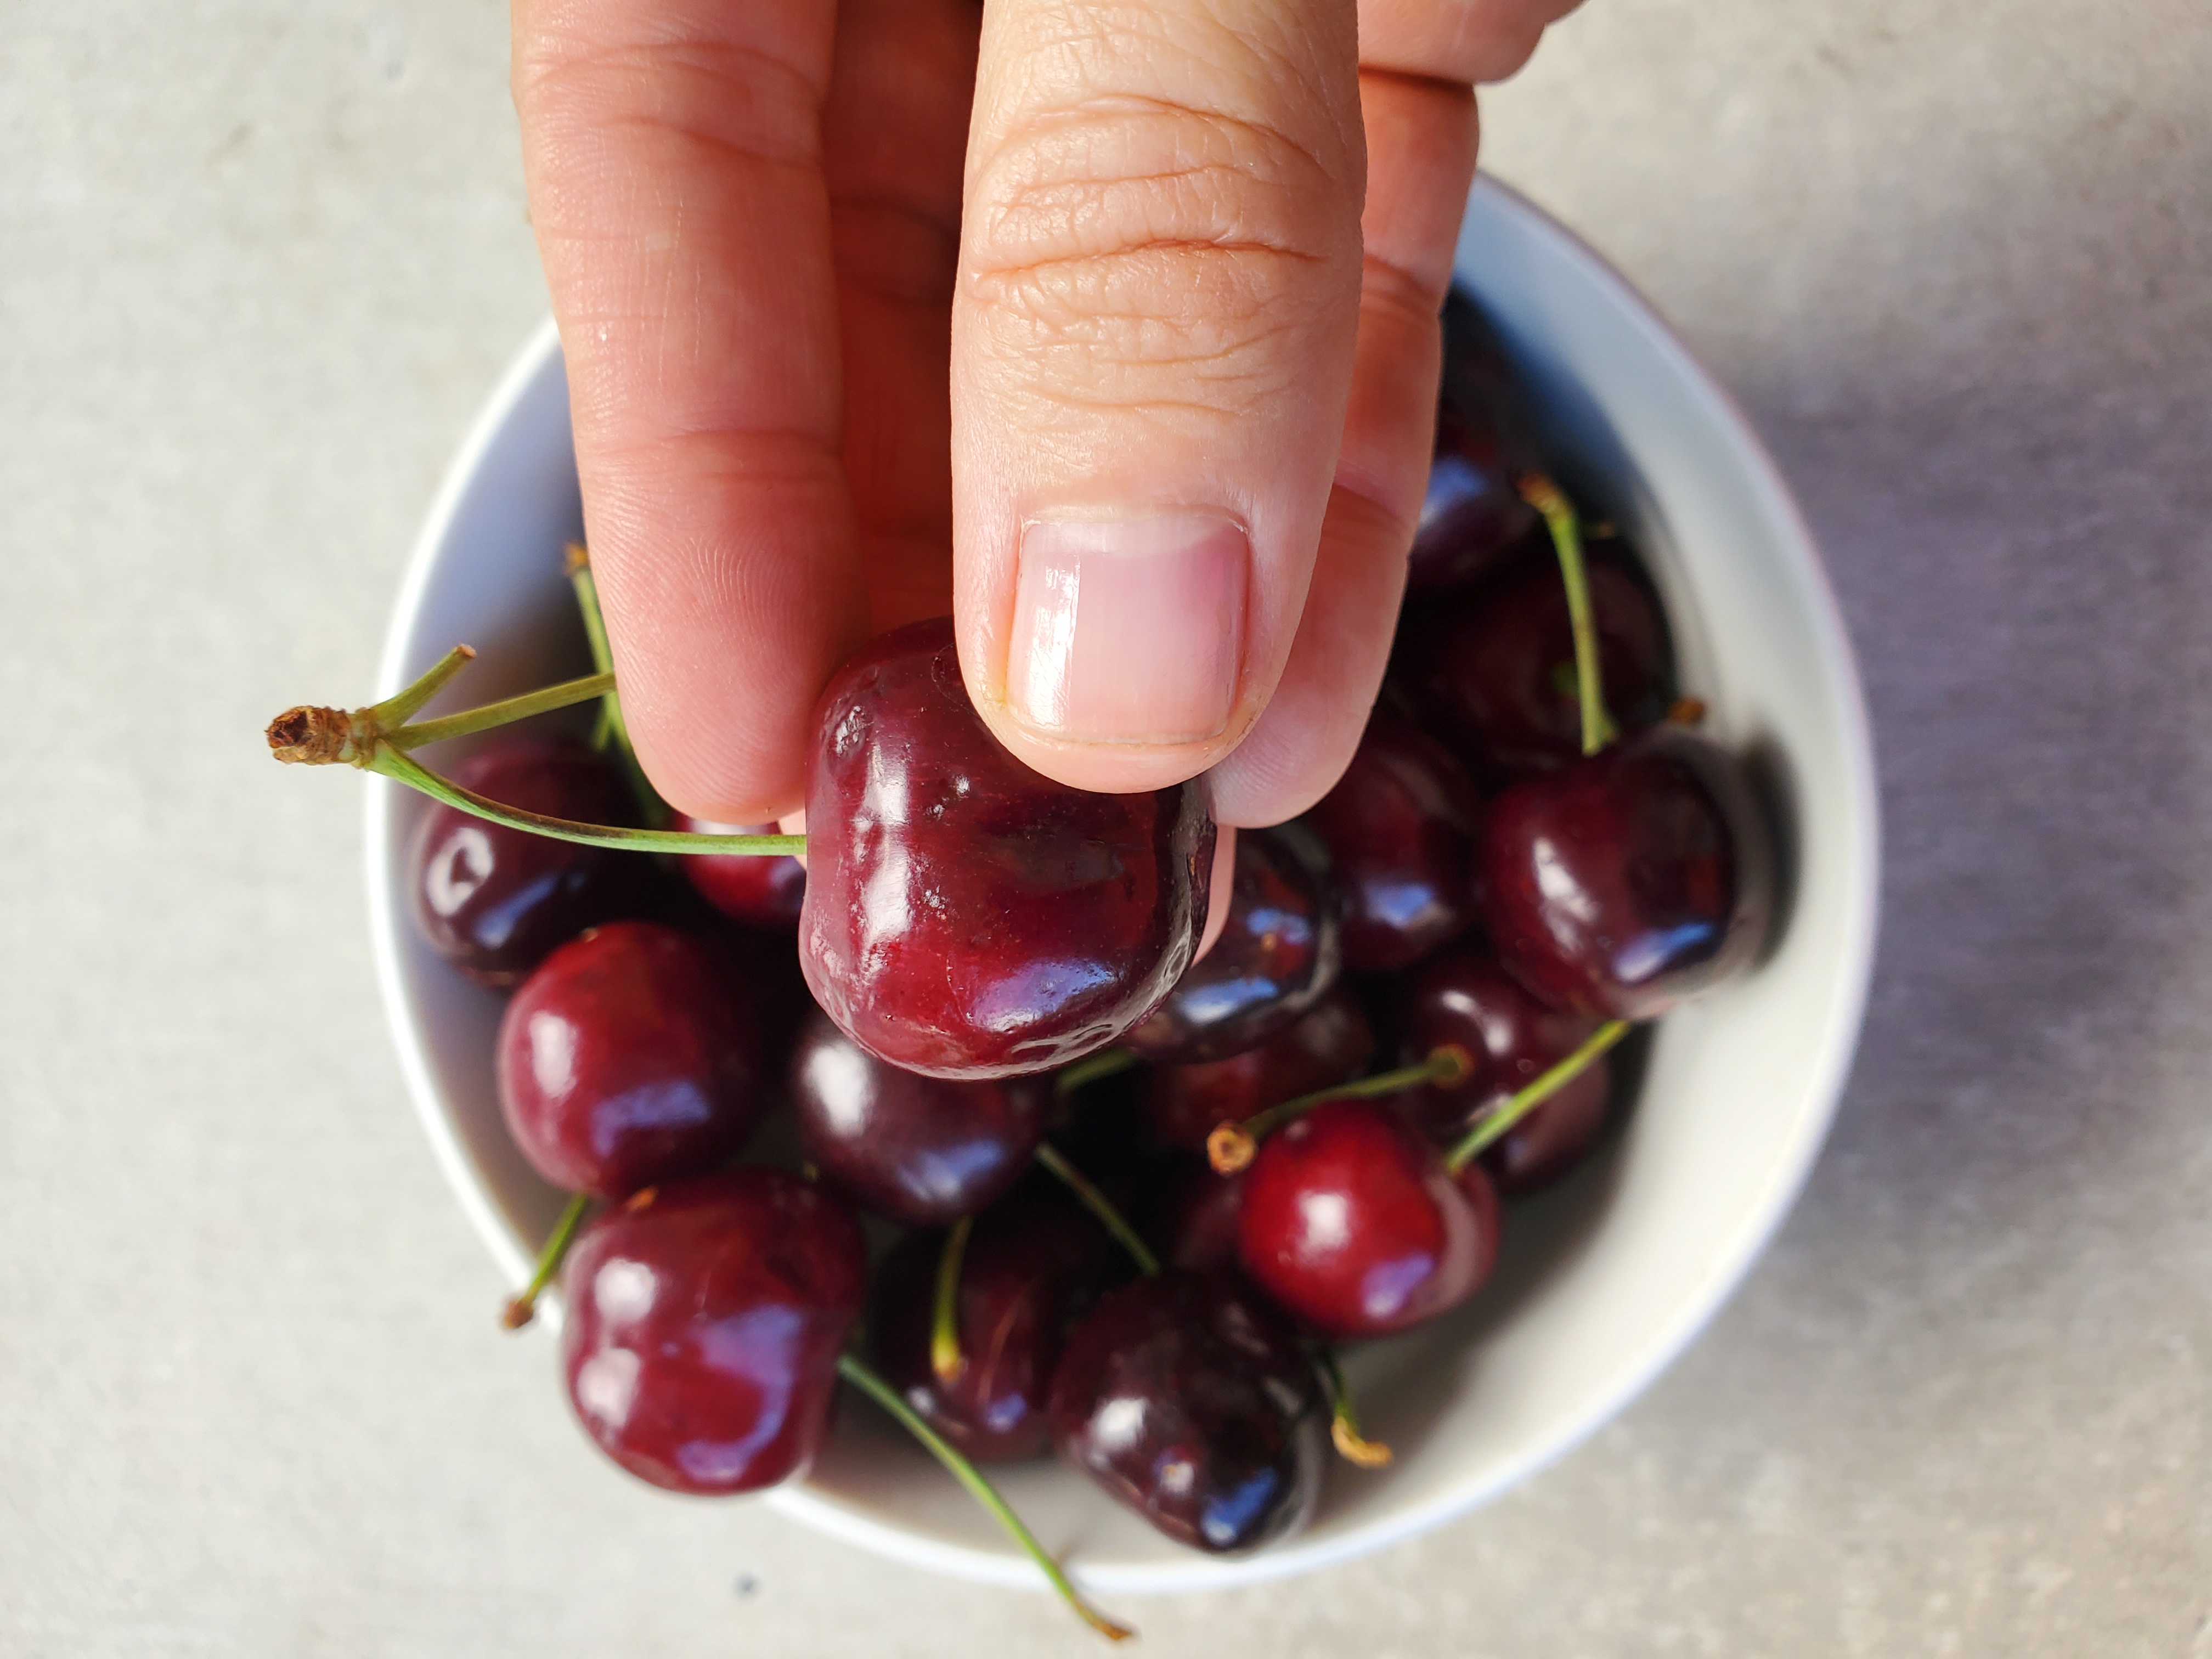 Bowl of cherries, hand holding one cherry up close